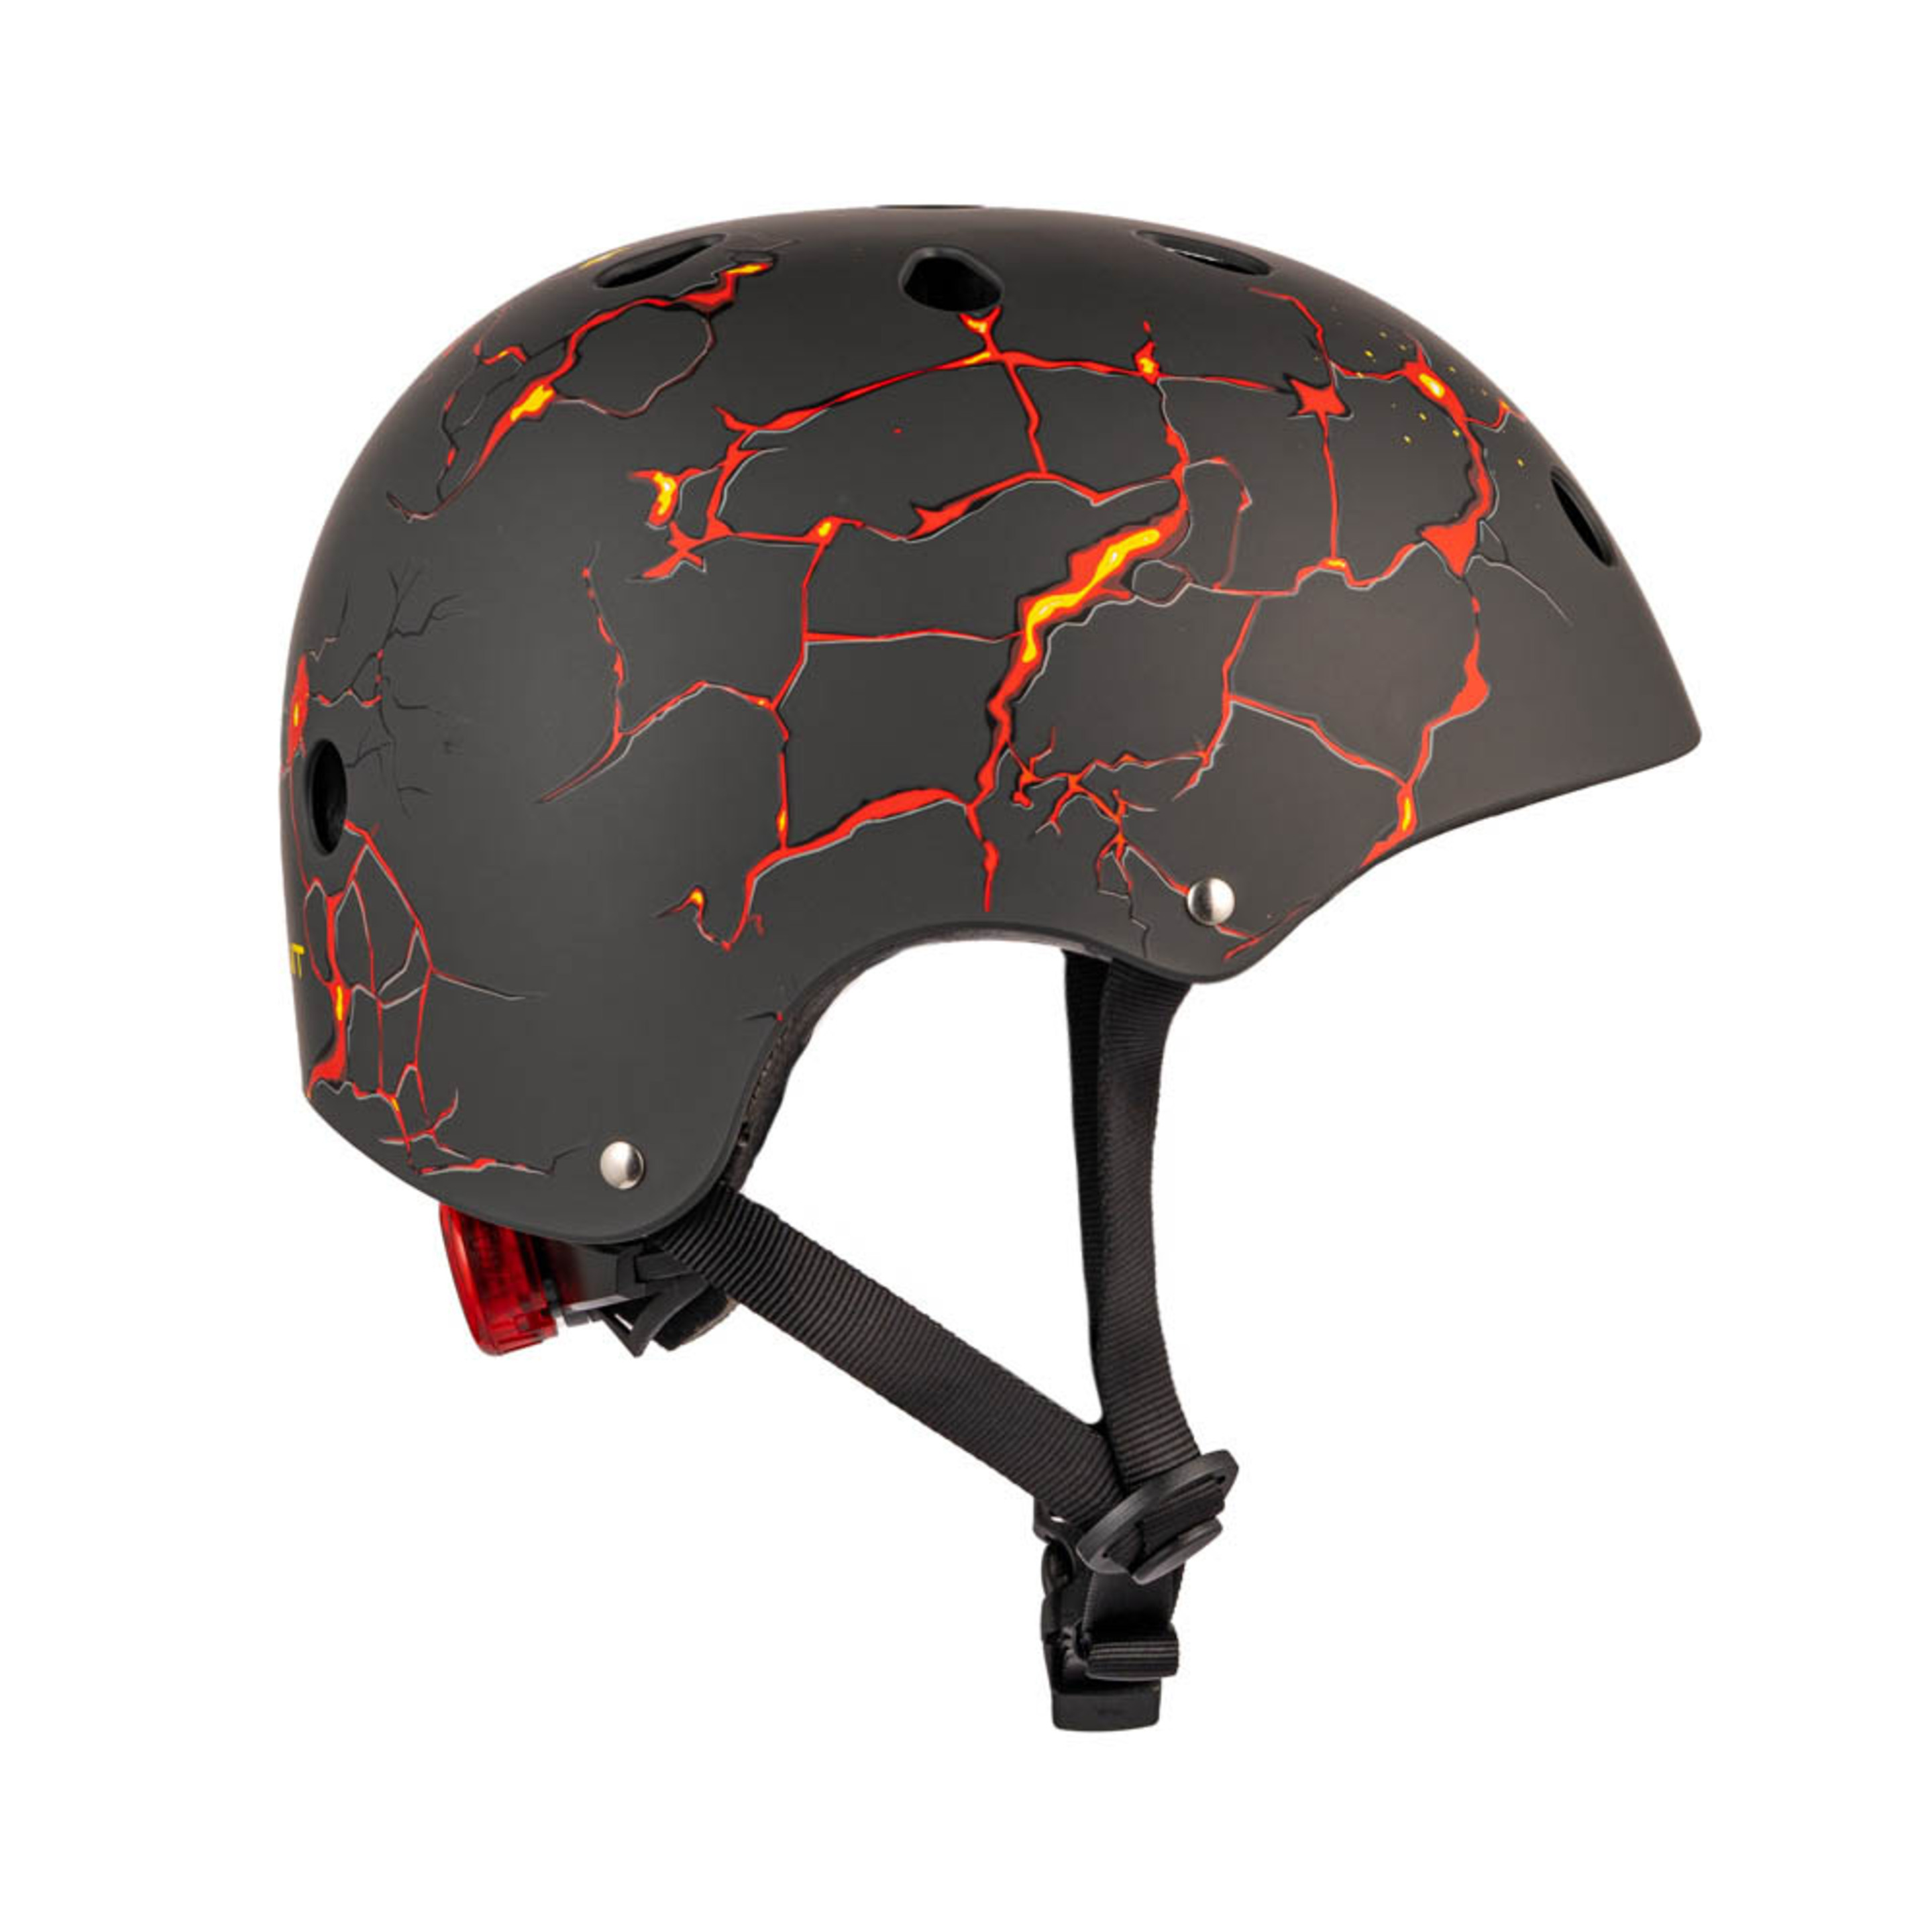 Mini Capacete De Bicicleta Hornit Lids Lava - Preto/Vermelho - O capacete mais fixe do mundo! | Sport Zone MKP